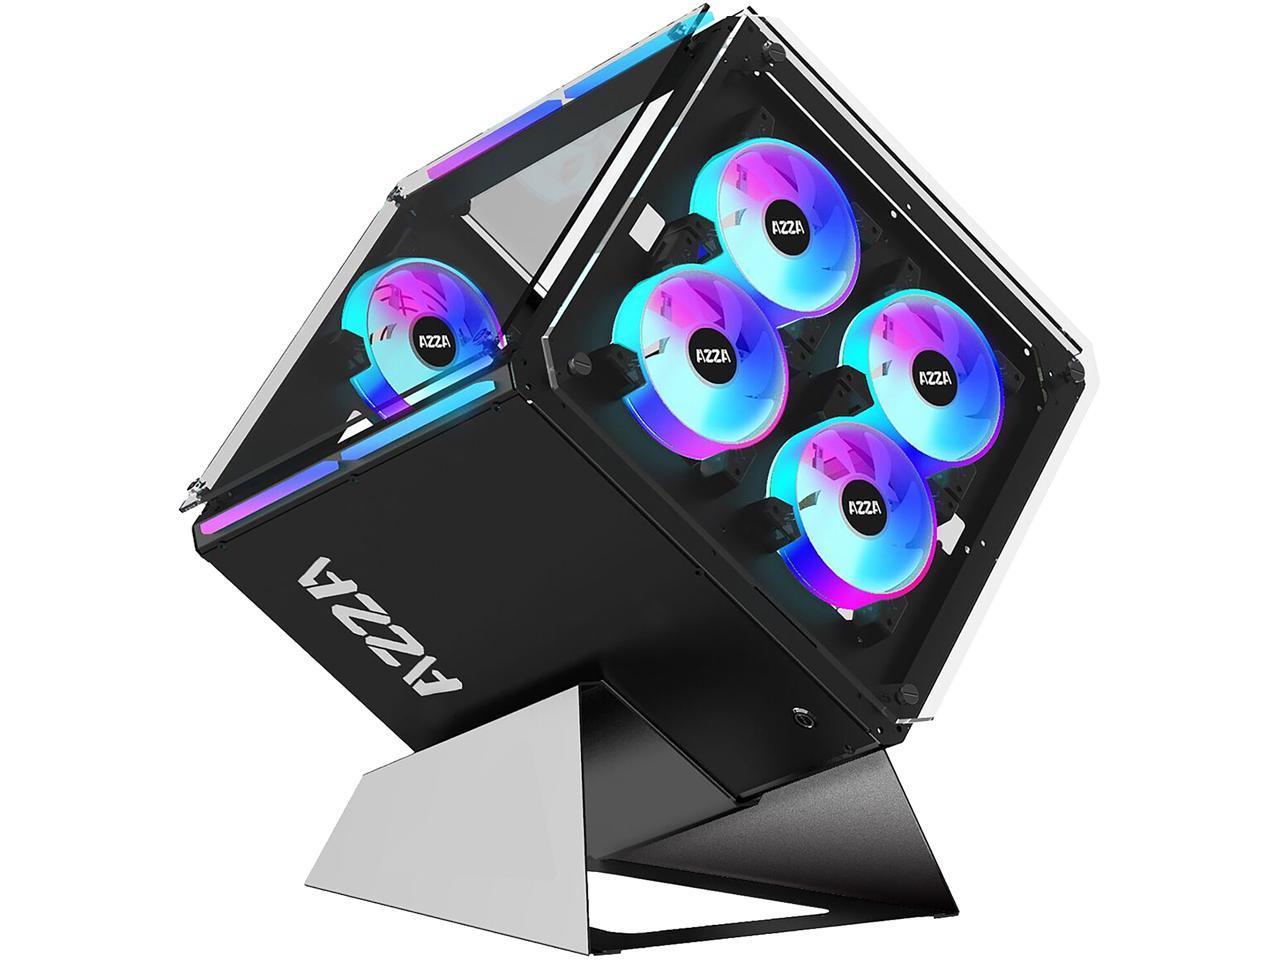 AZZA Cube PC case